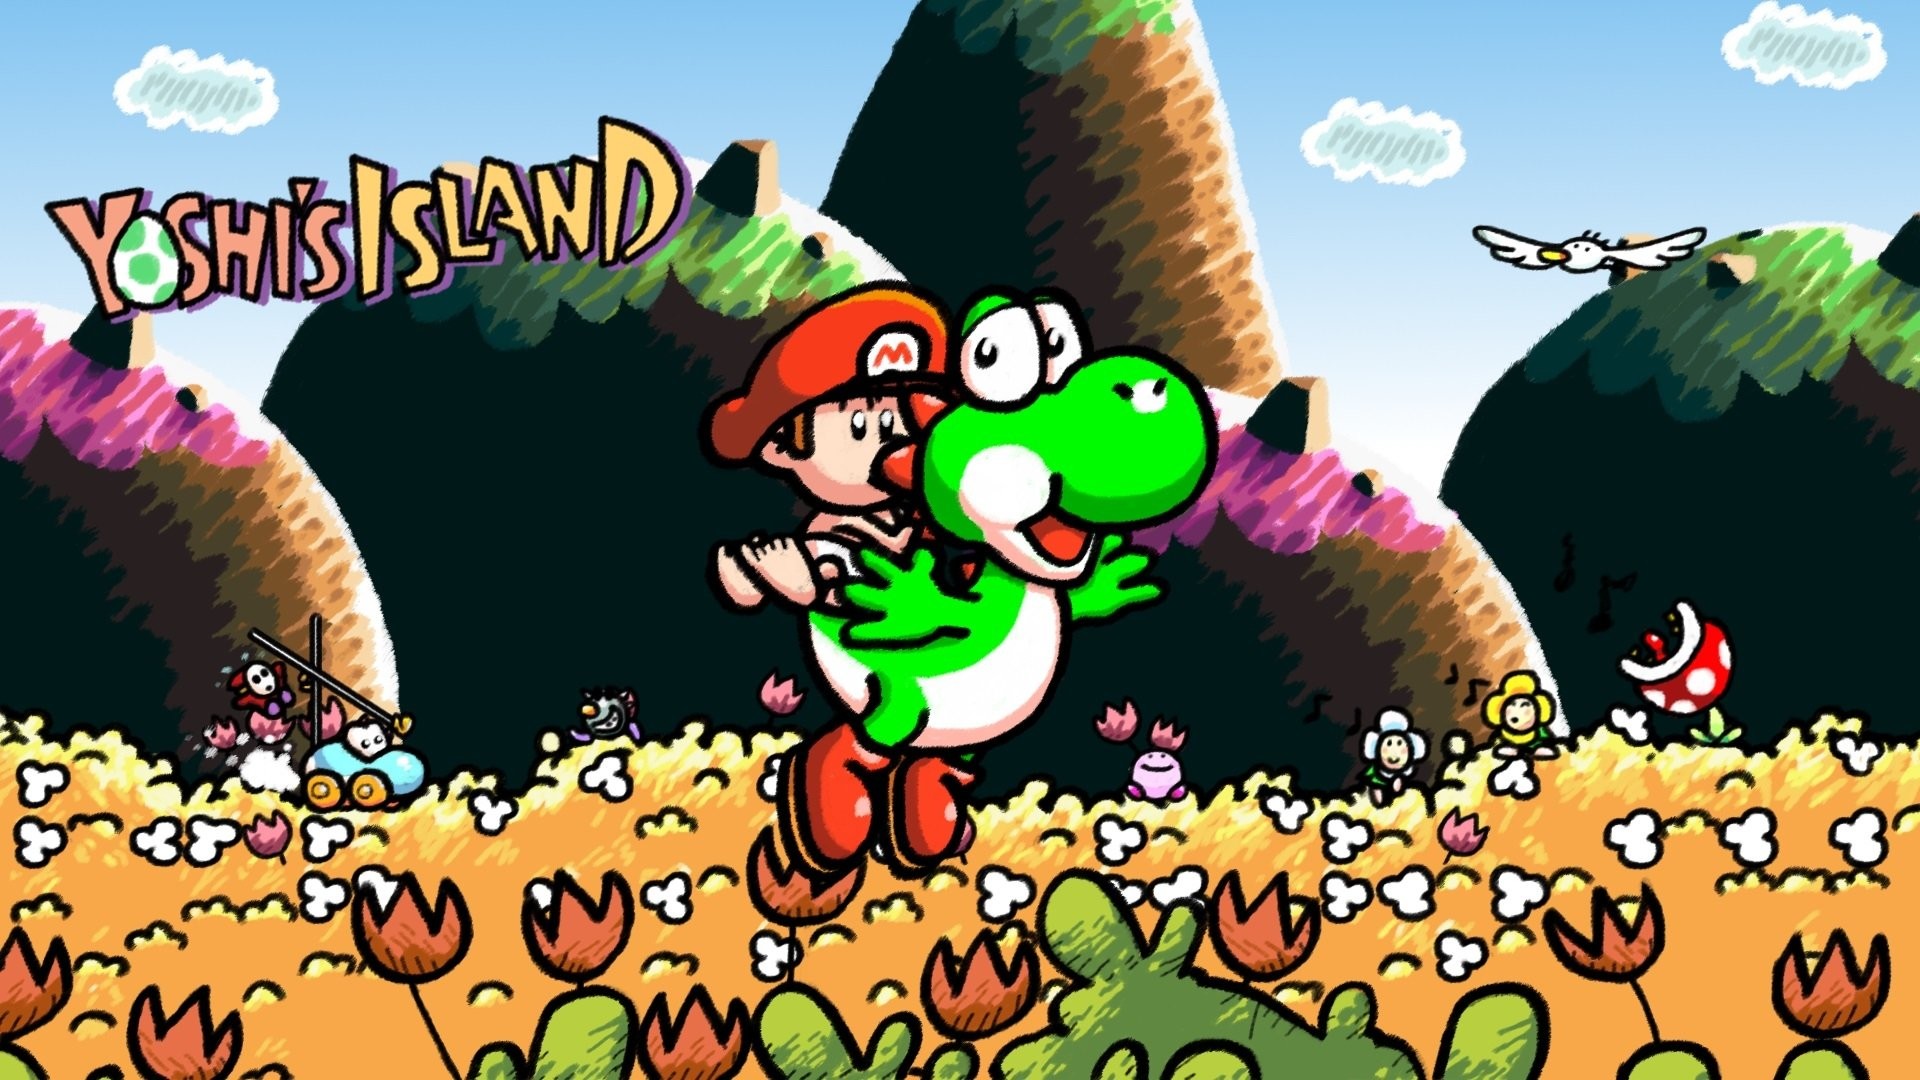 Super mario world. Super Mario Advance 3 Yoshi's Island. Супер Марио мир 2 остров Йоши. Mario Yoshi Island 3. Super Mario World 2 Yoshi's Island Snes.